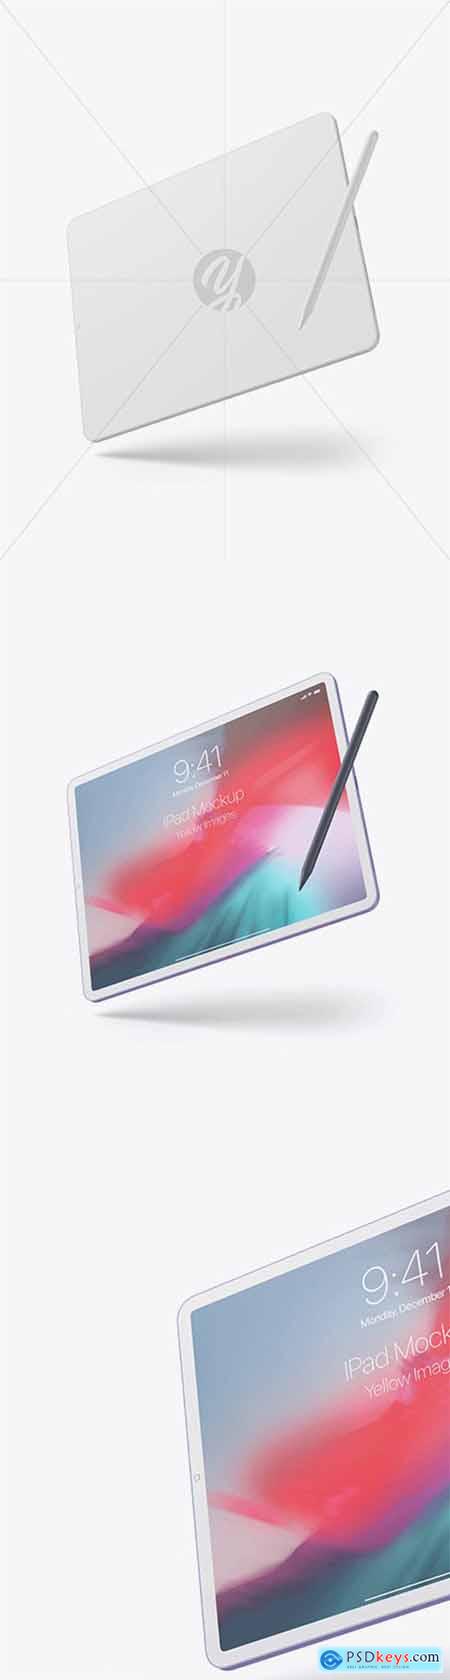 Clay Apple iPad Pro 2018 12.9 Mockup 56998